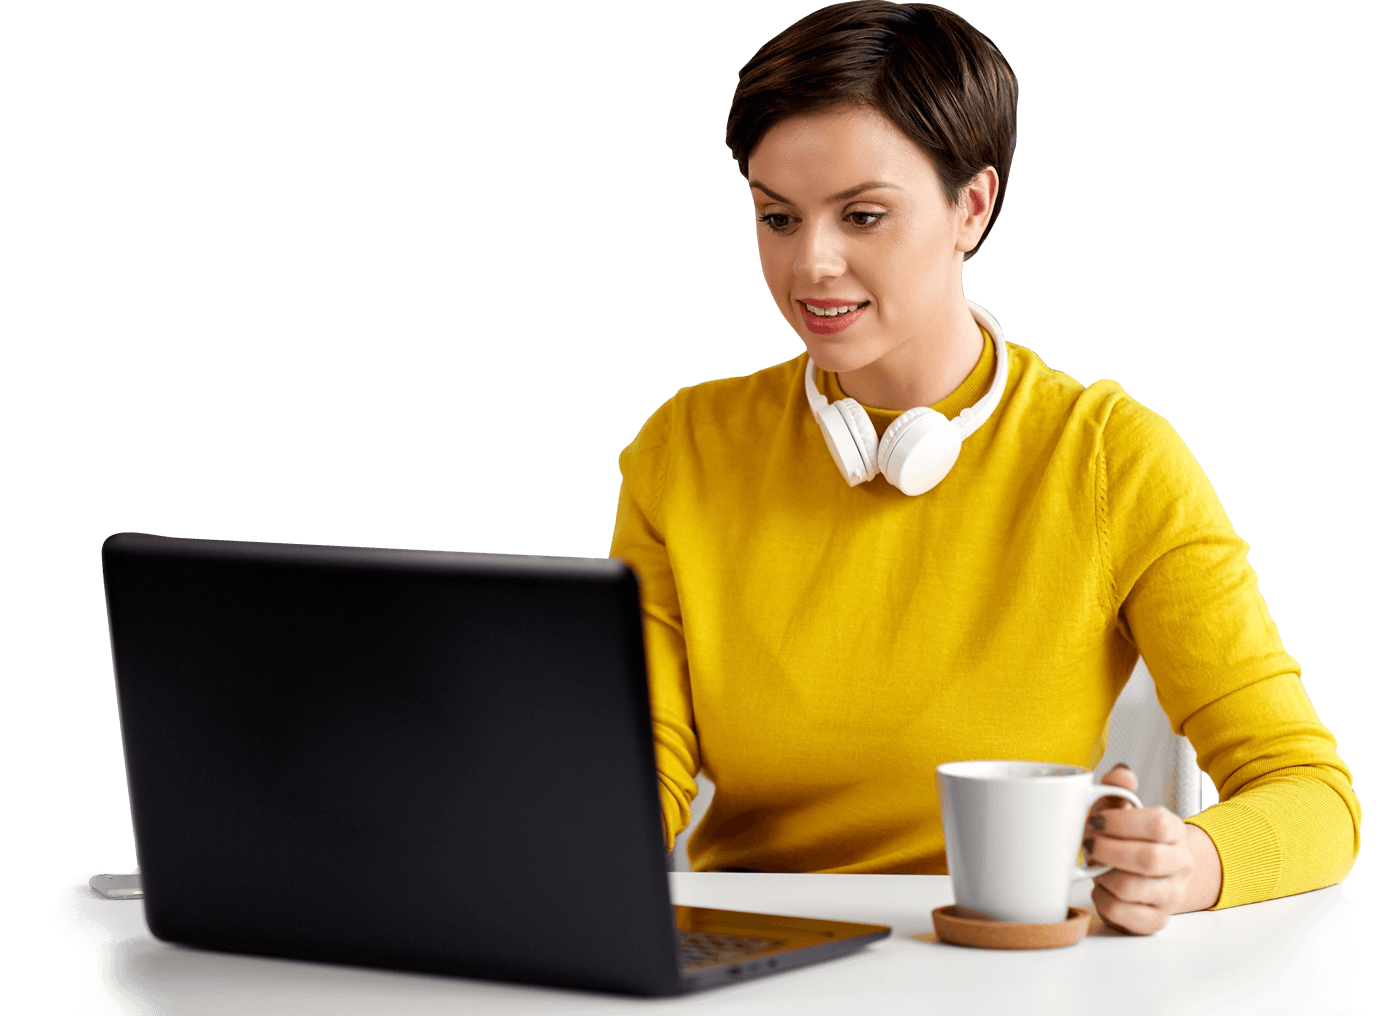 Woman holding coffee mug and using a laptop